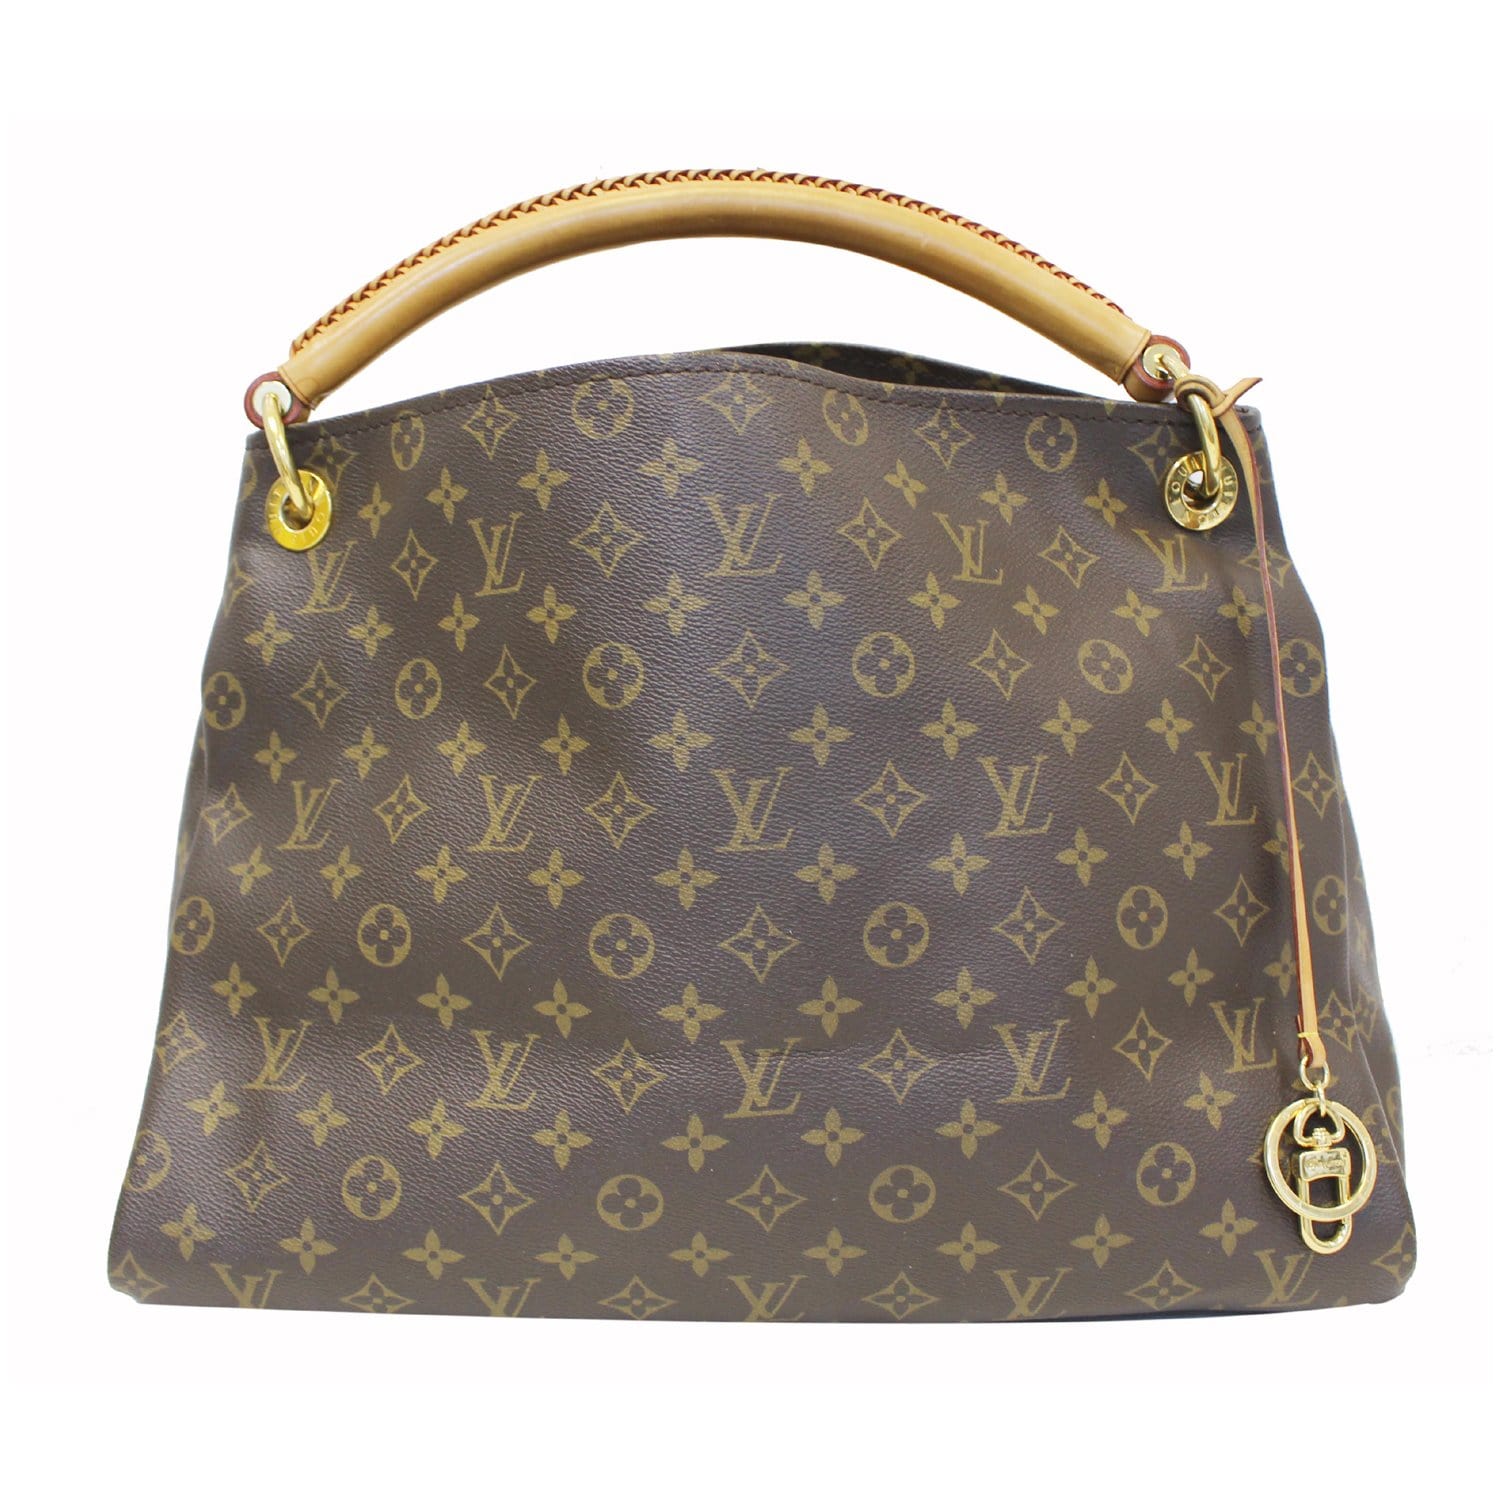 Louis vuitton handbags  Fashion, Louis vuitton artsy, Fashion bags